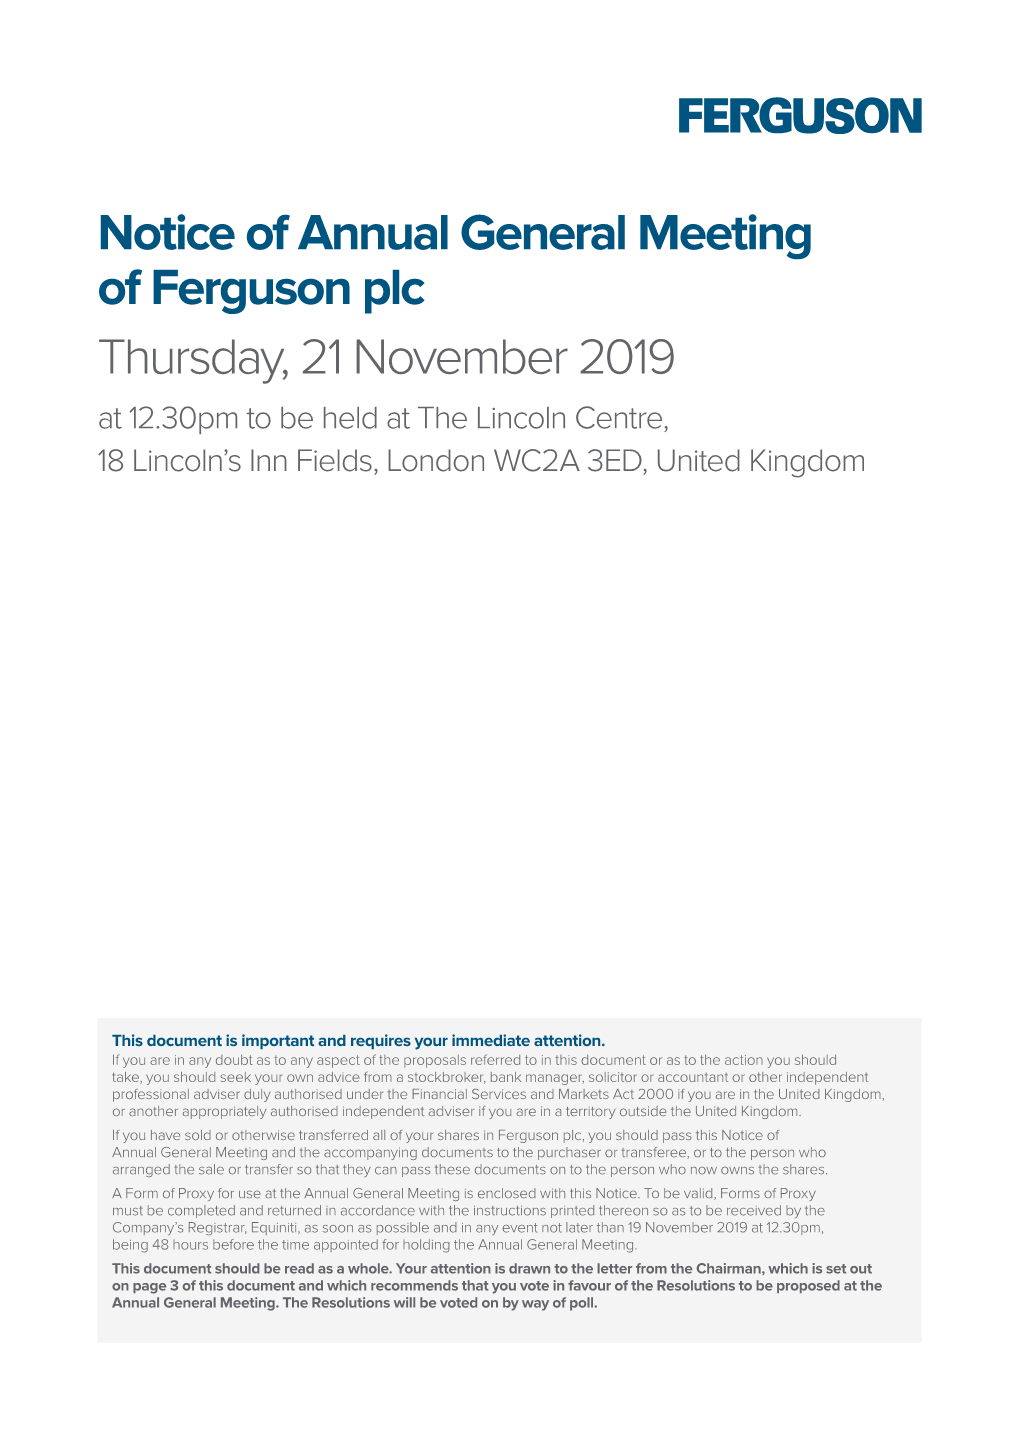 Notice of Annual General Meeting of Ferguson Plc Thursday, 21